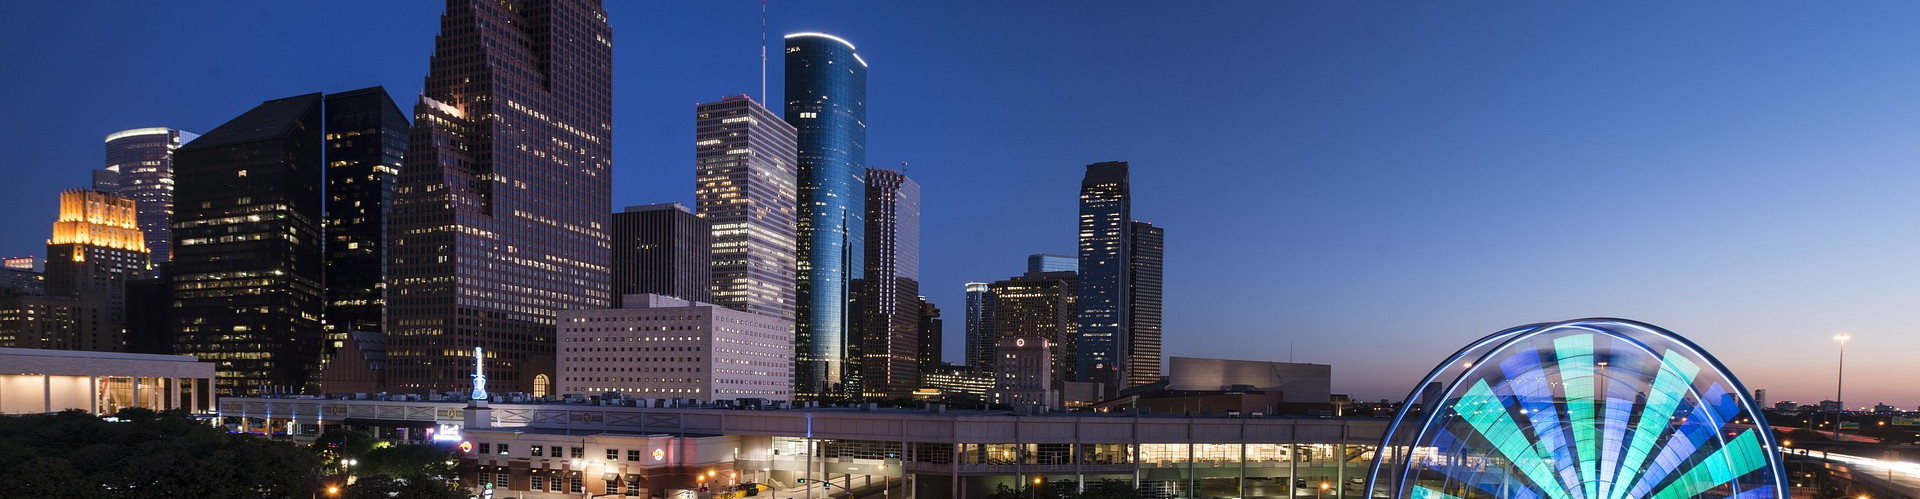 Skyline of Houston at night